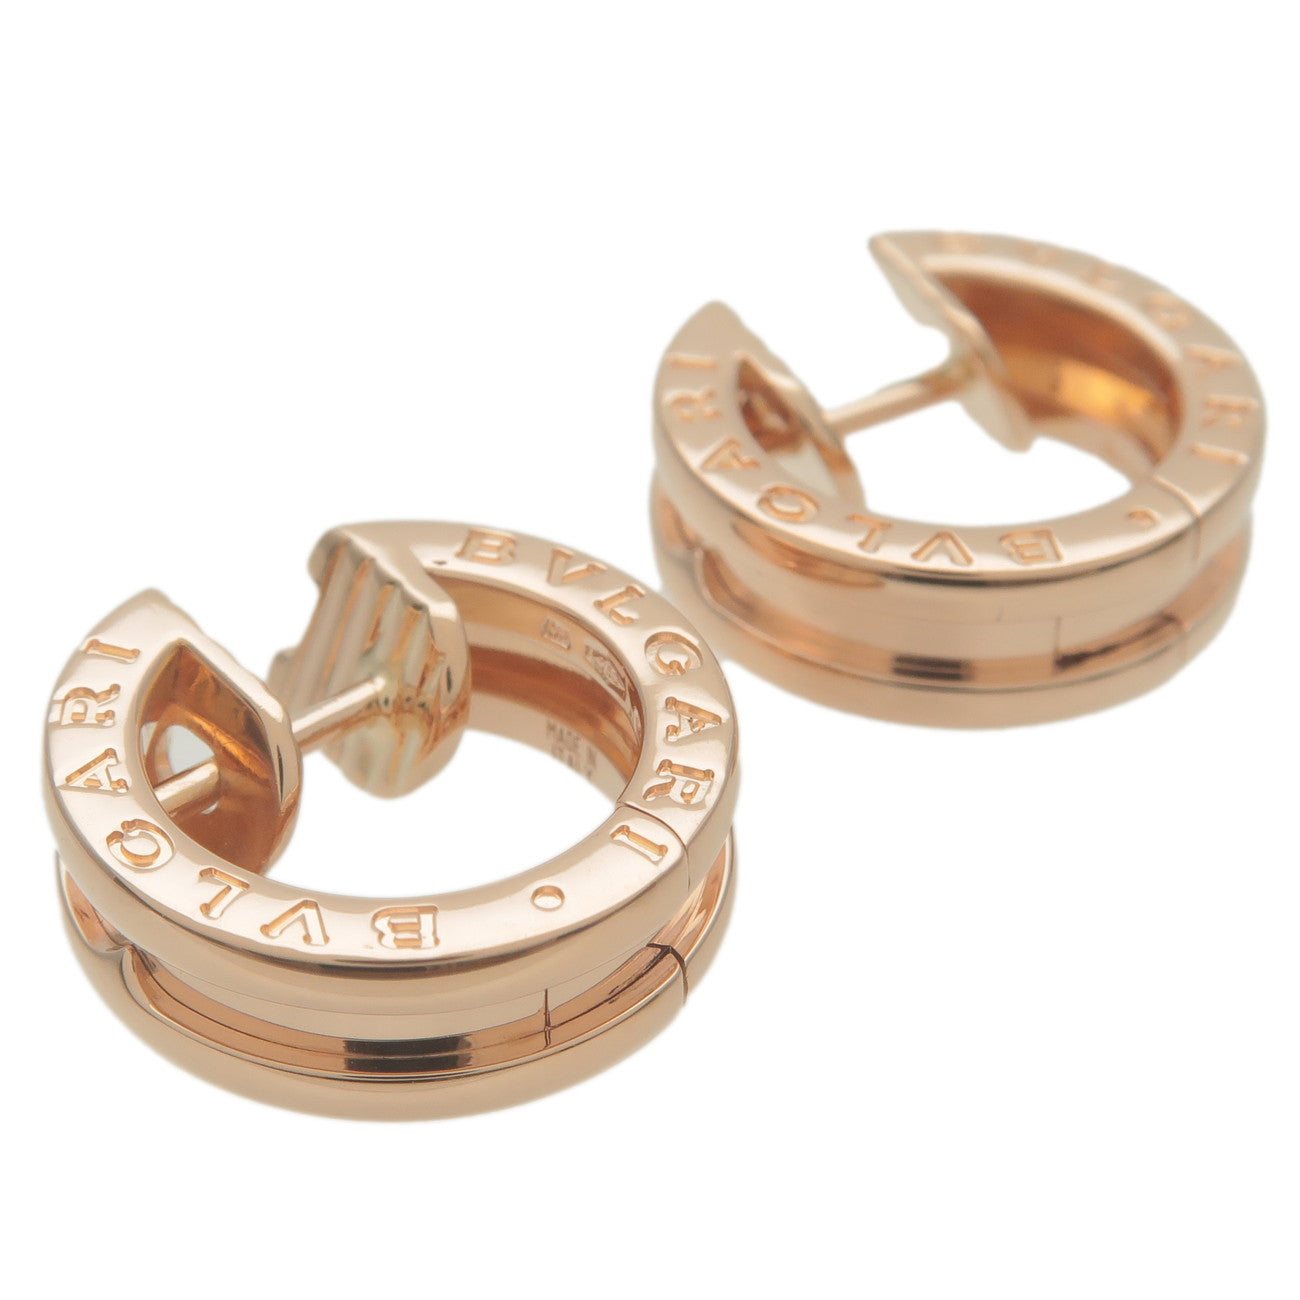 Rose gold B.zero1 Earrings with 0.18 ct Diamonds | Bulgari Official Store |  Earrings, Rose gold earrings, Huggies earrings